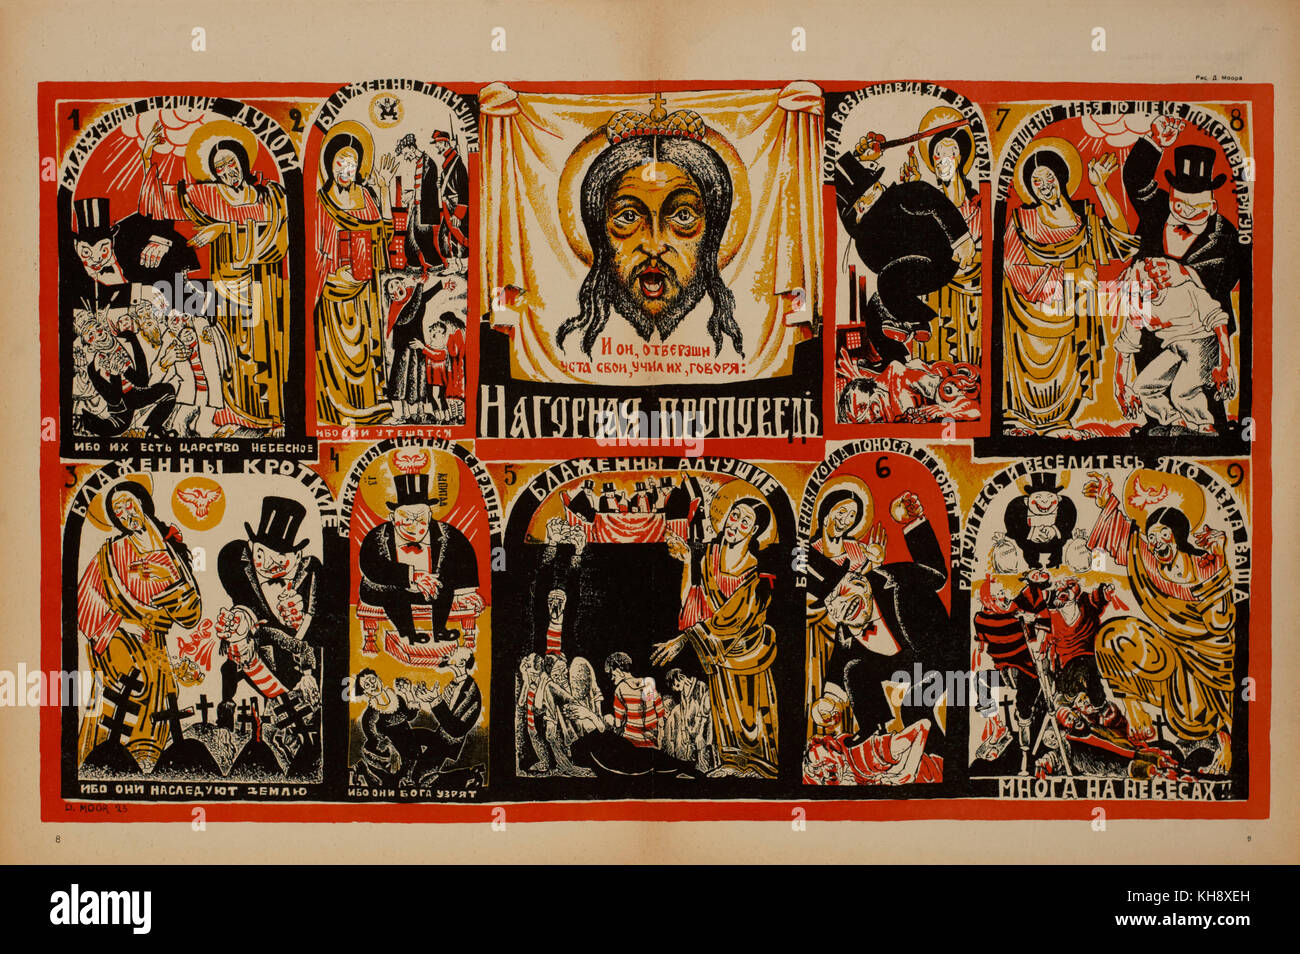 Affiches de propagande anti-religion, bezbozhnik u stanka magazine, illustration par Dimitri Moor, Russie, 1923 Banque D'Images